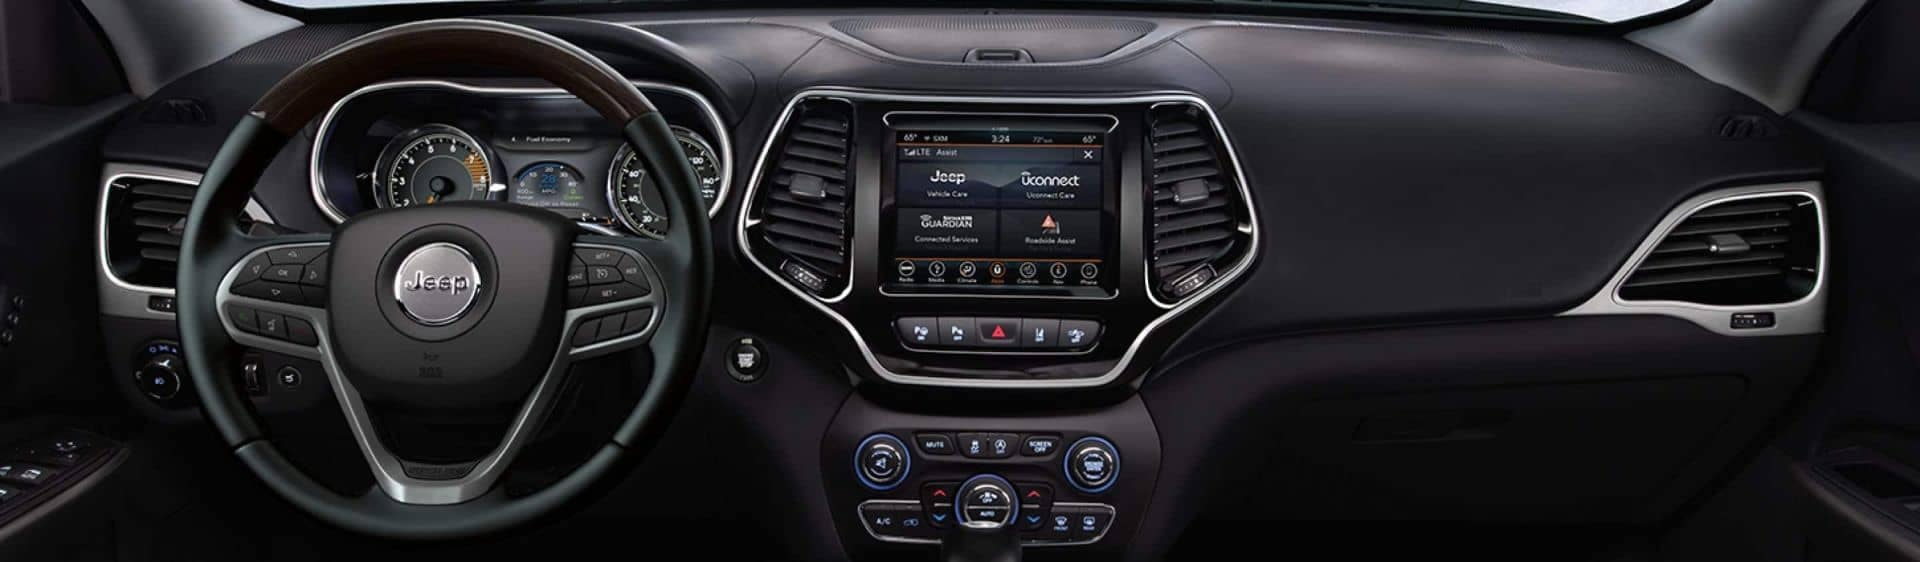 2019-Jeep-Cherokee-Overview-Interior-Premium-Interior